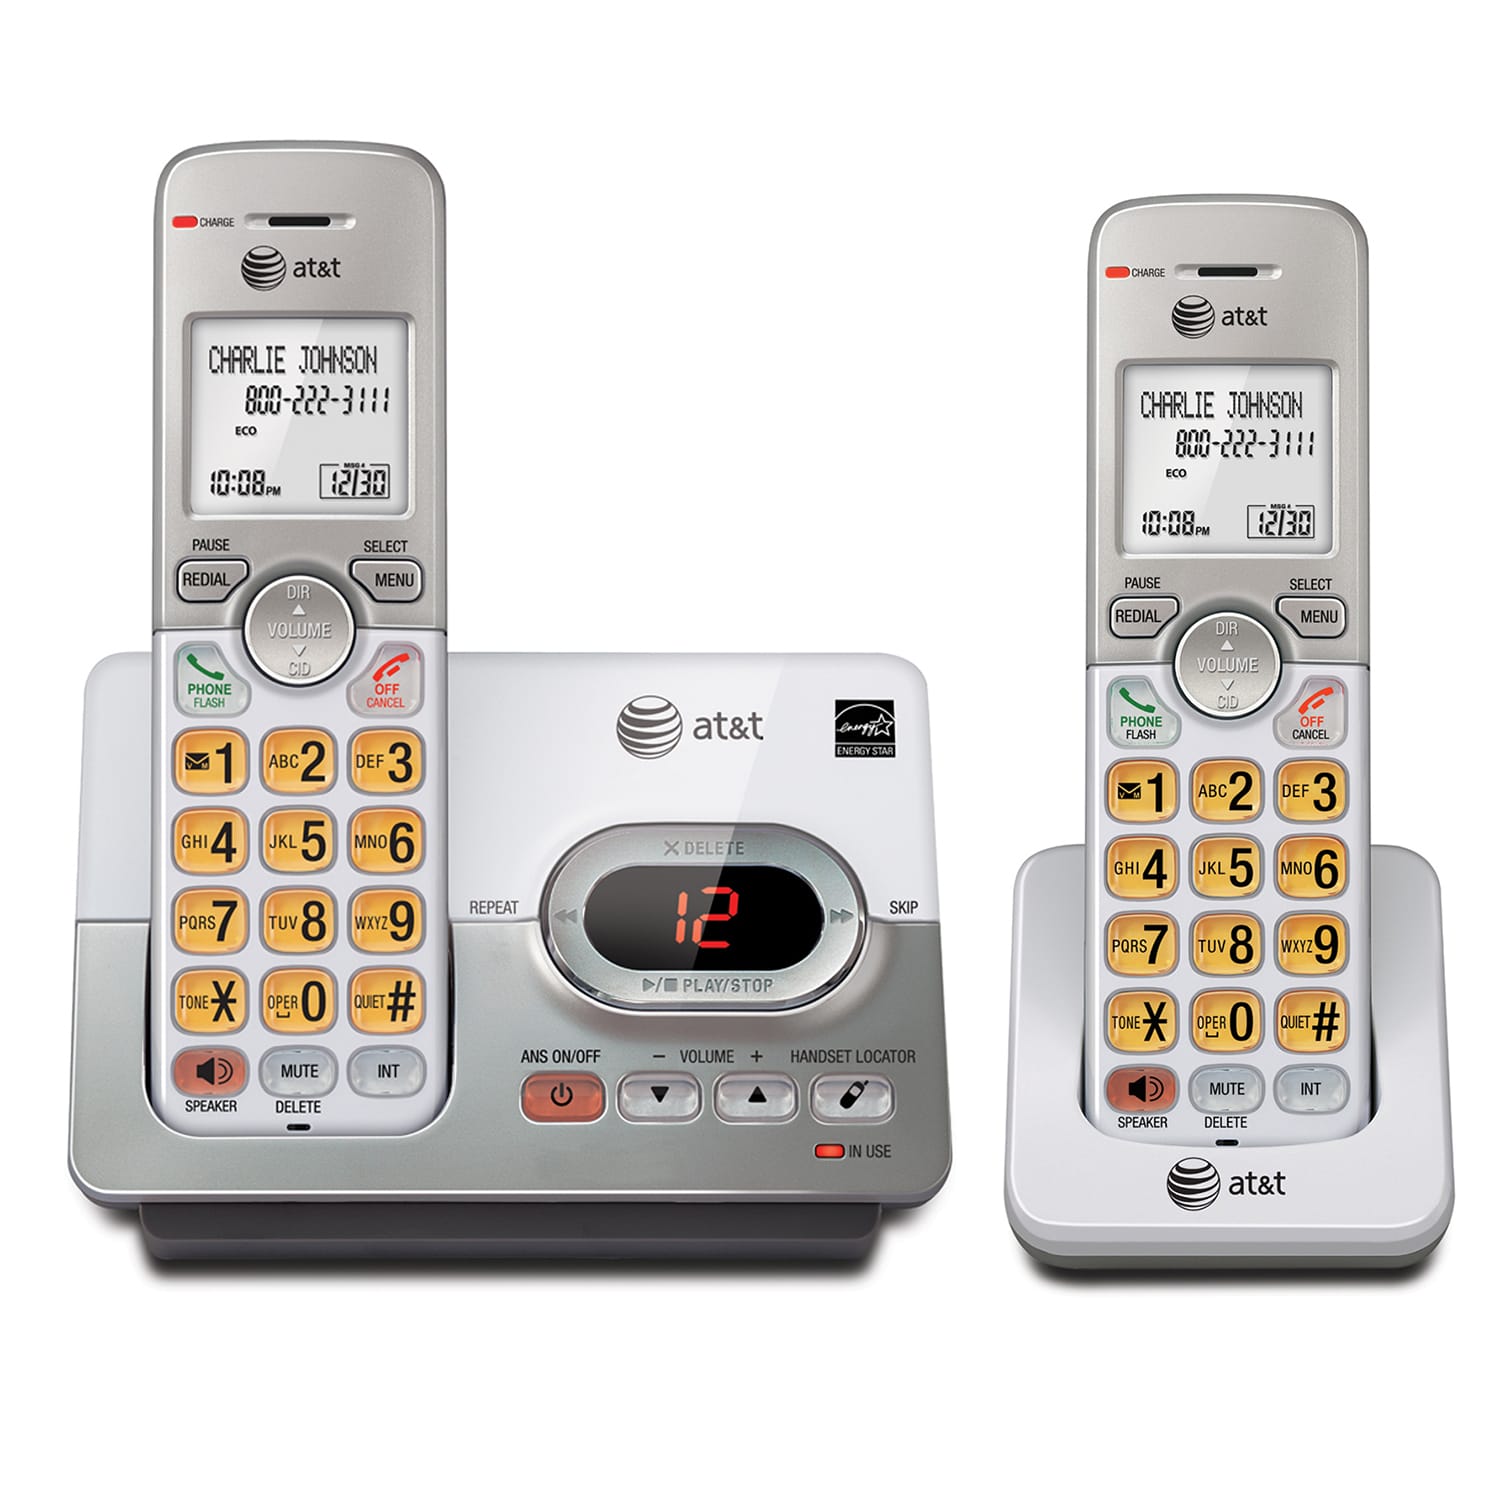 AT&T TL7900 5.8 Ghz Radio Frequency 1-Handset 2-Line Landline Telephone 